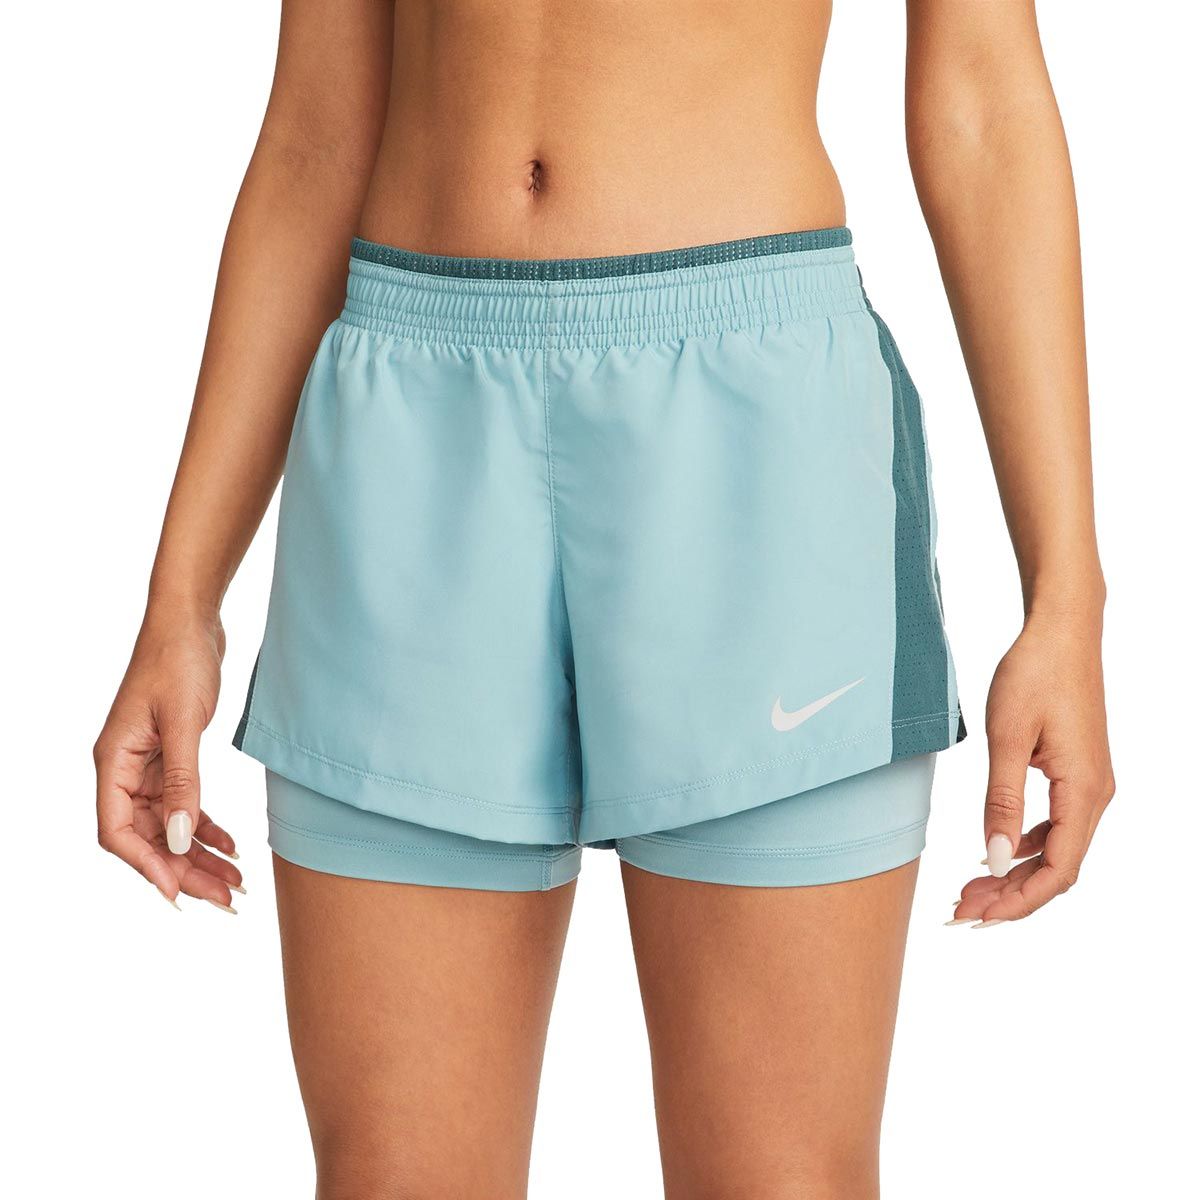 Nike 2-In-1 Running Shorts